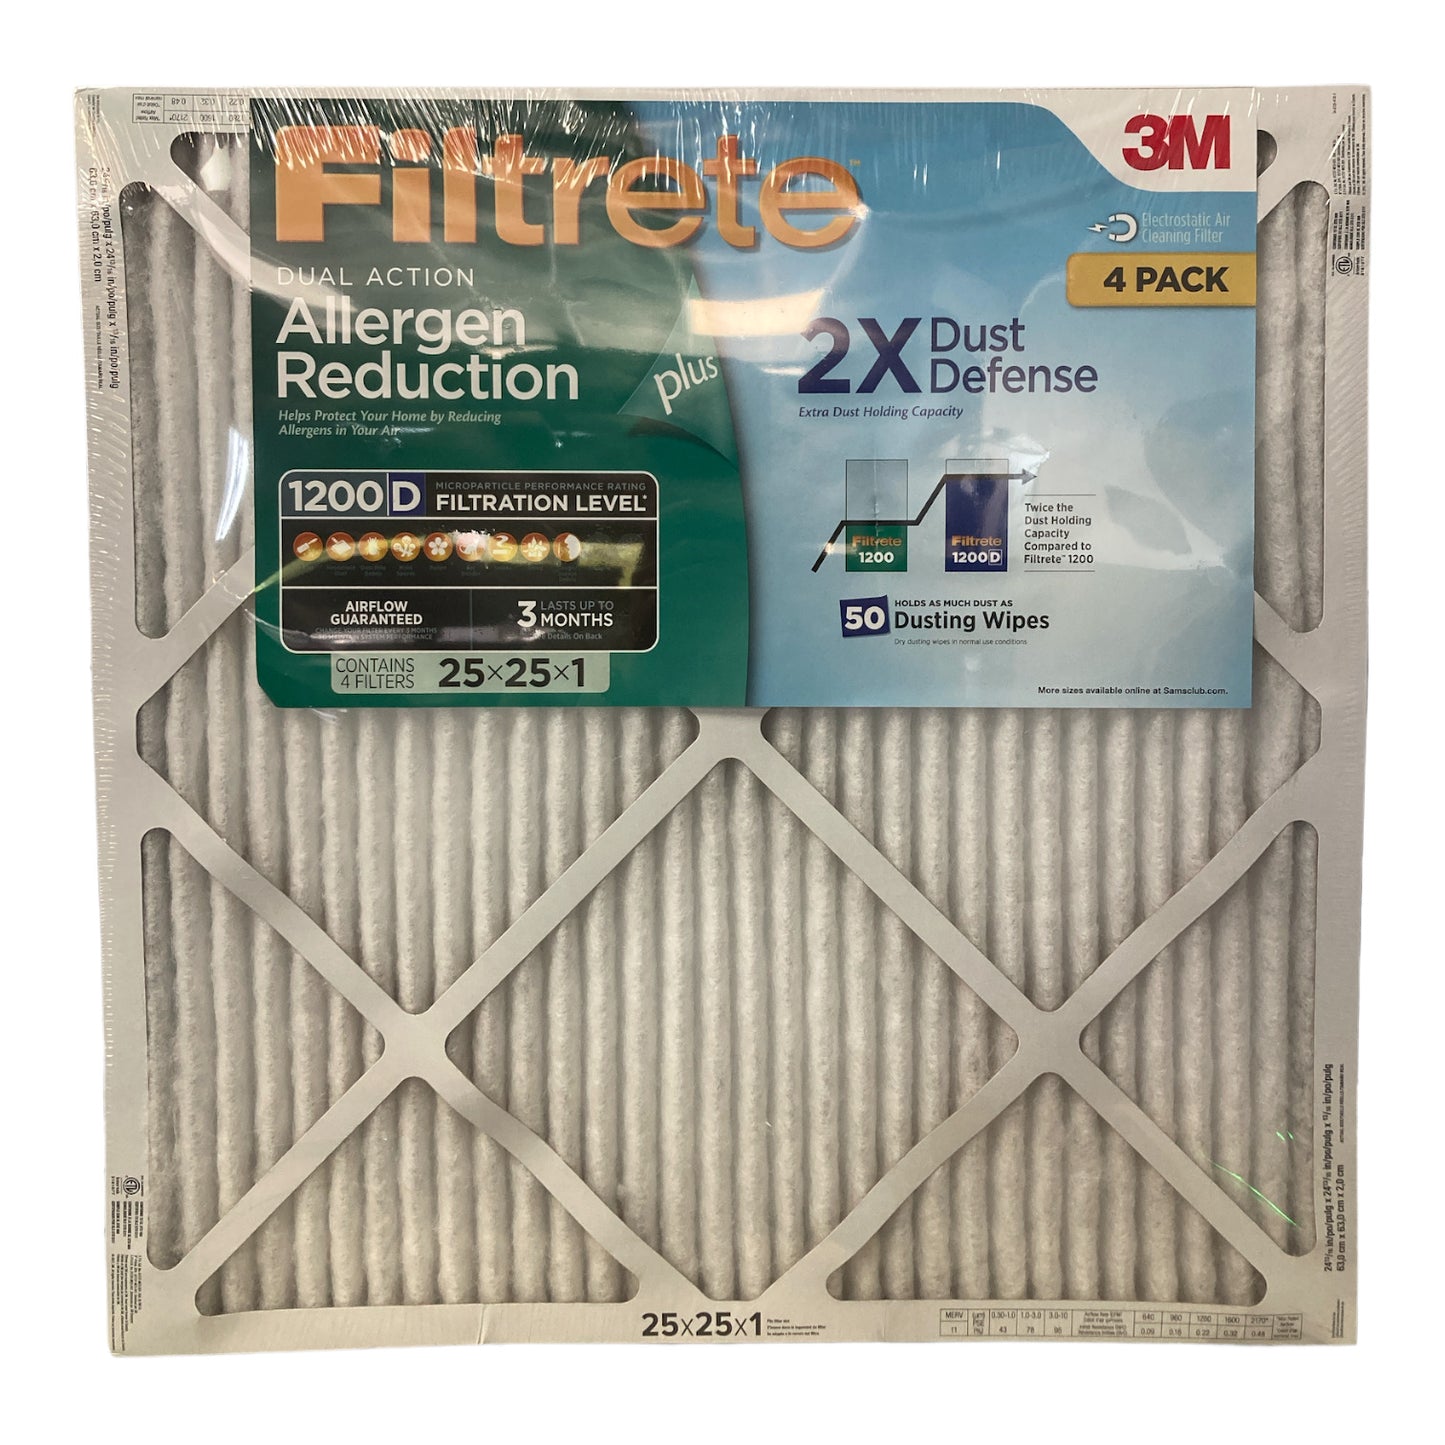 25 x 25 x 1 Filtrete Allergen Reduction Plus 2X Dust Filter (4 pk.)